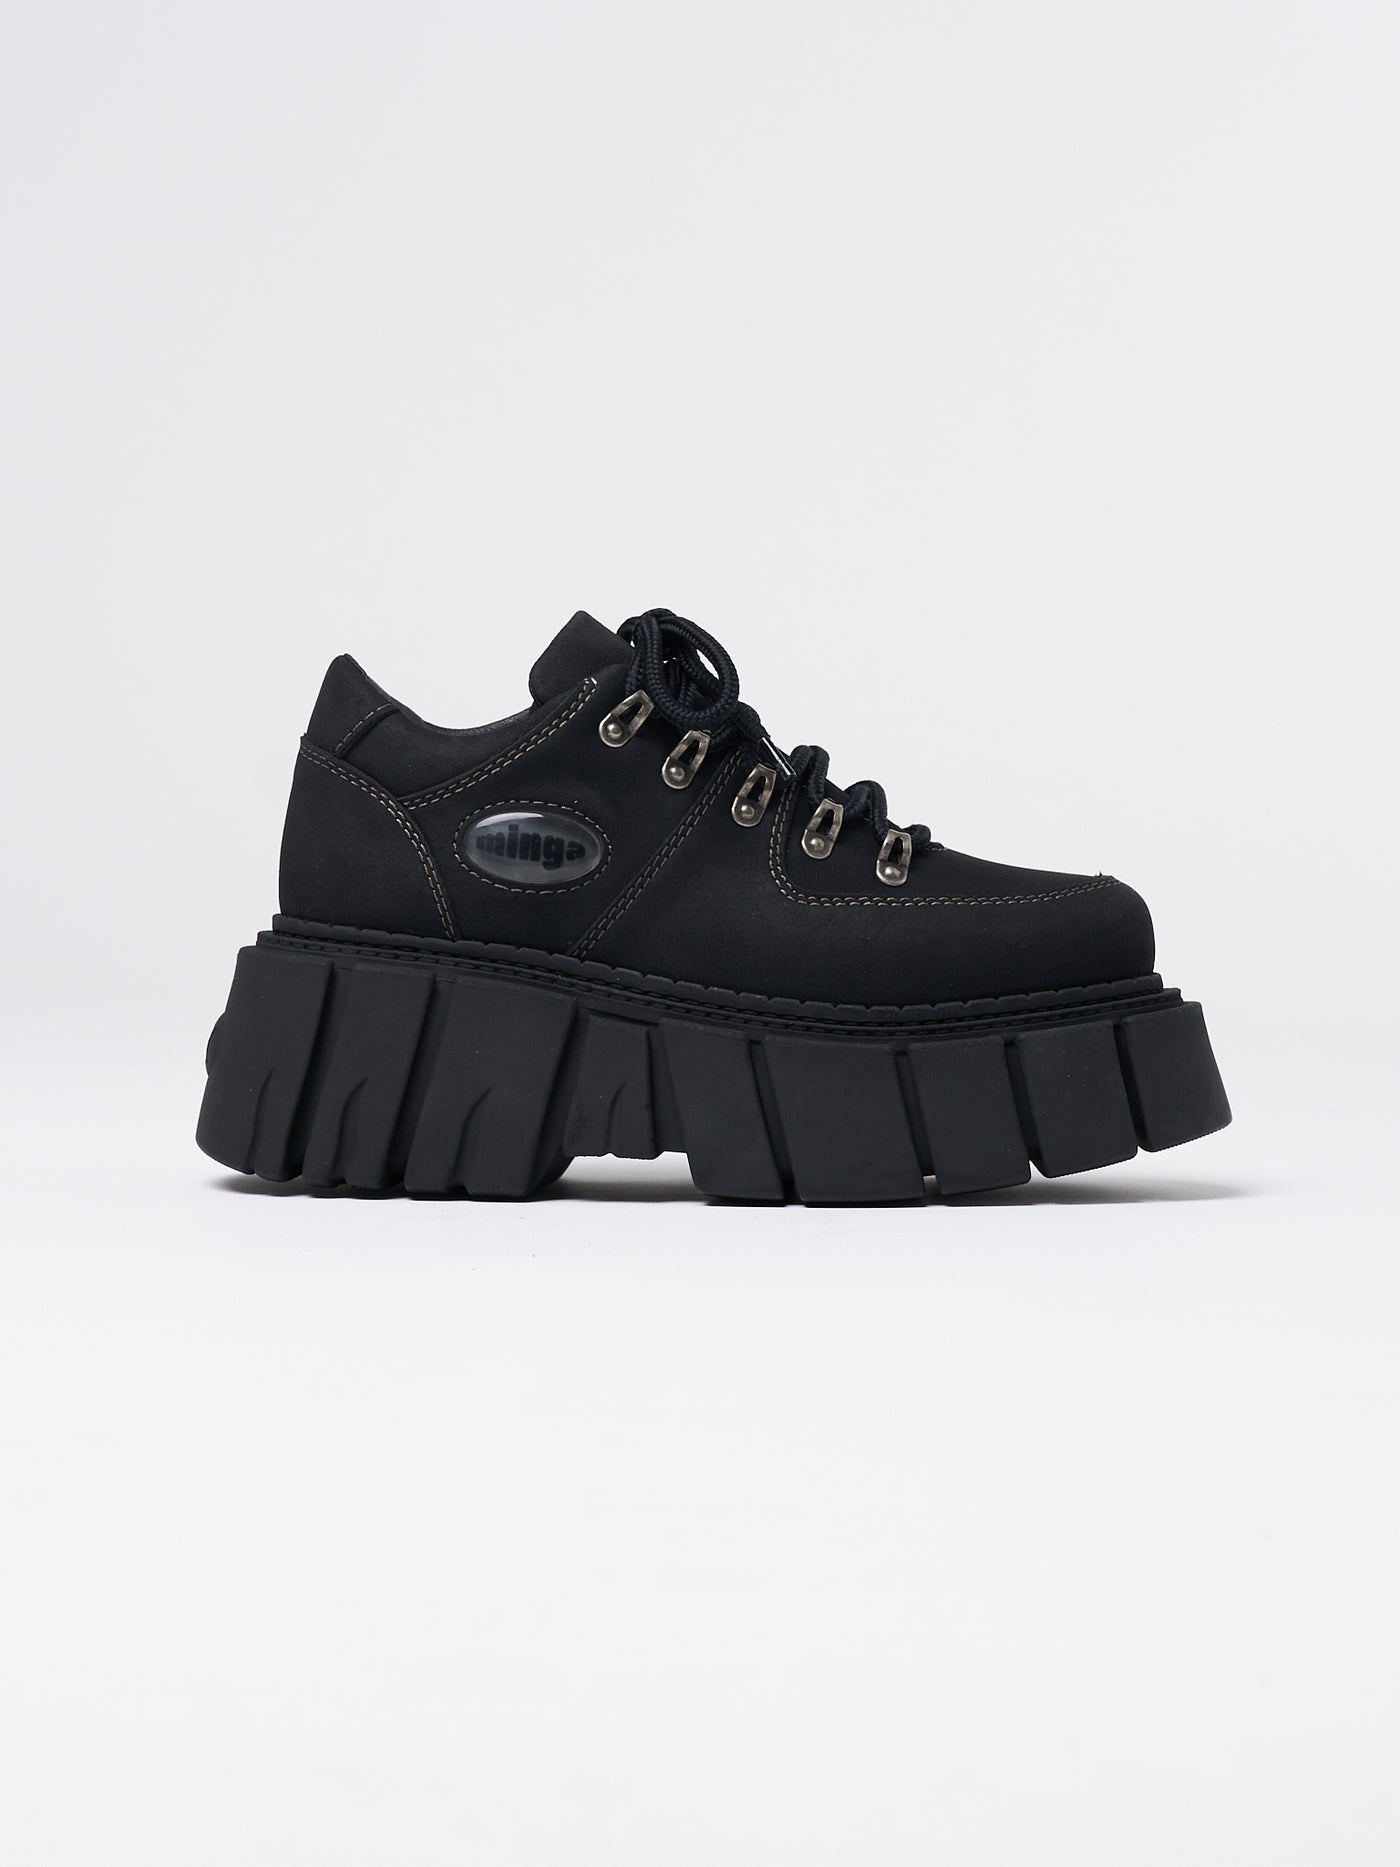 Chunky platform vegan black shoes by Minga London. Sleek, versatile, and cruelty-free footwear for effortless style and comfort.